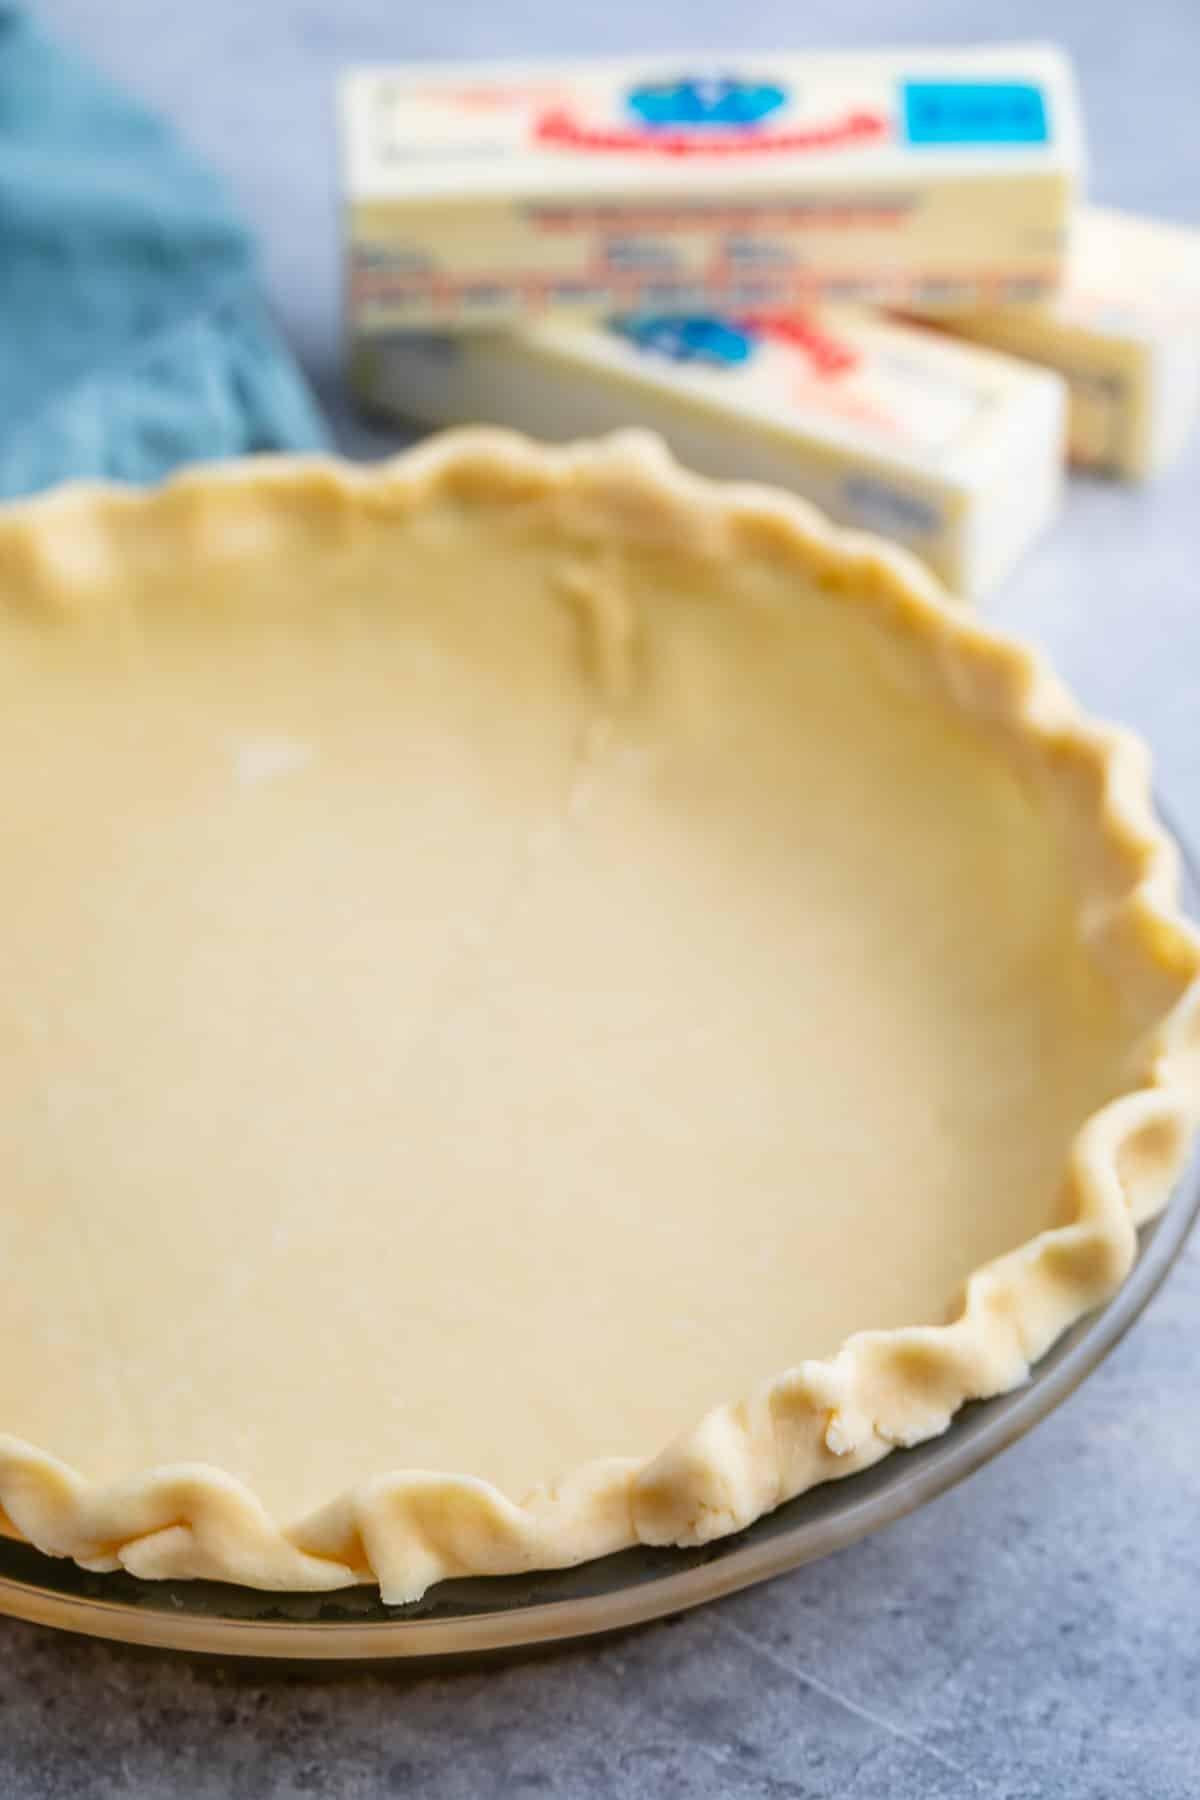 butter pie crust in a clear pan.